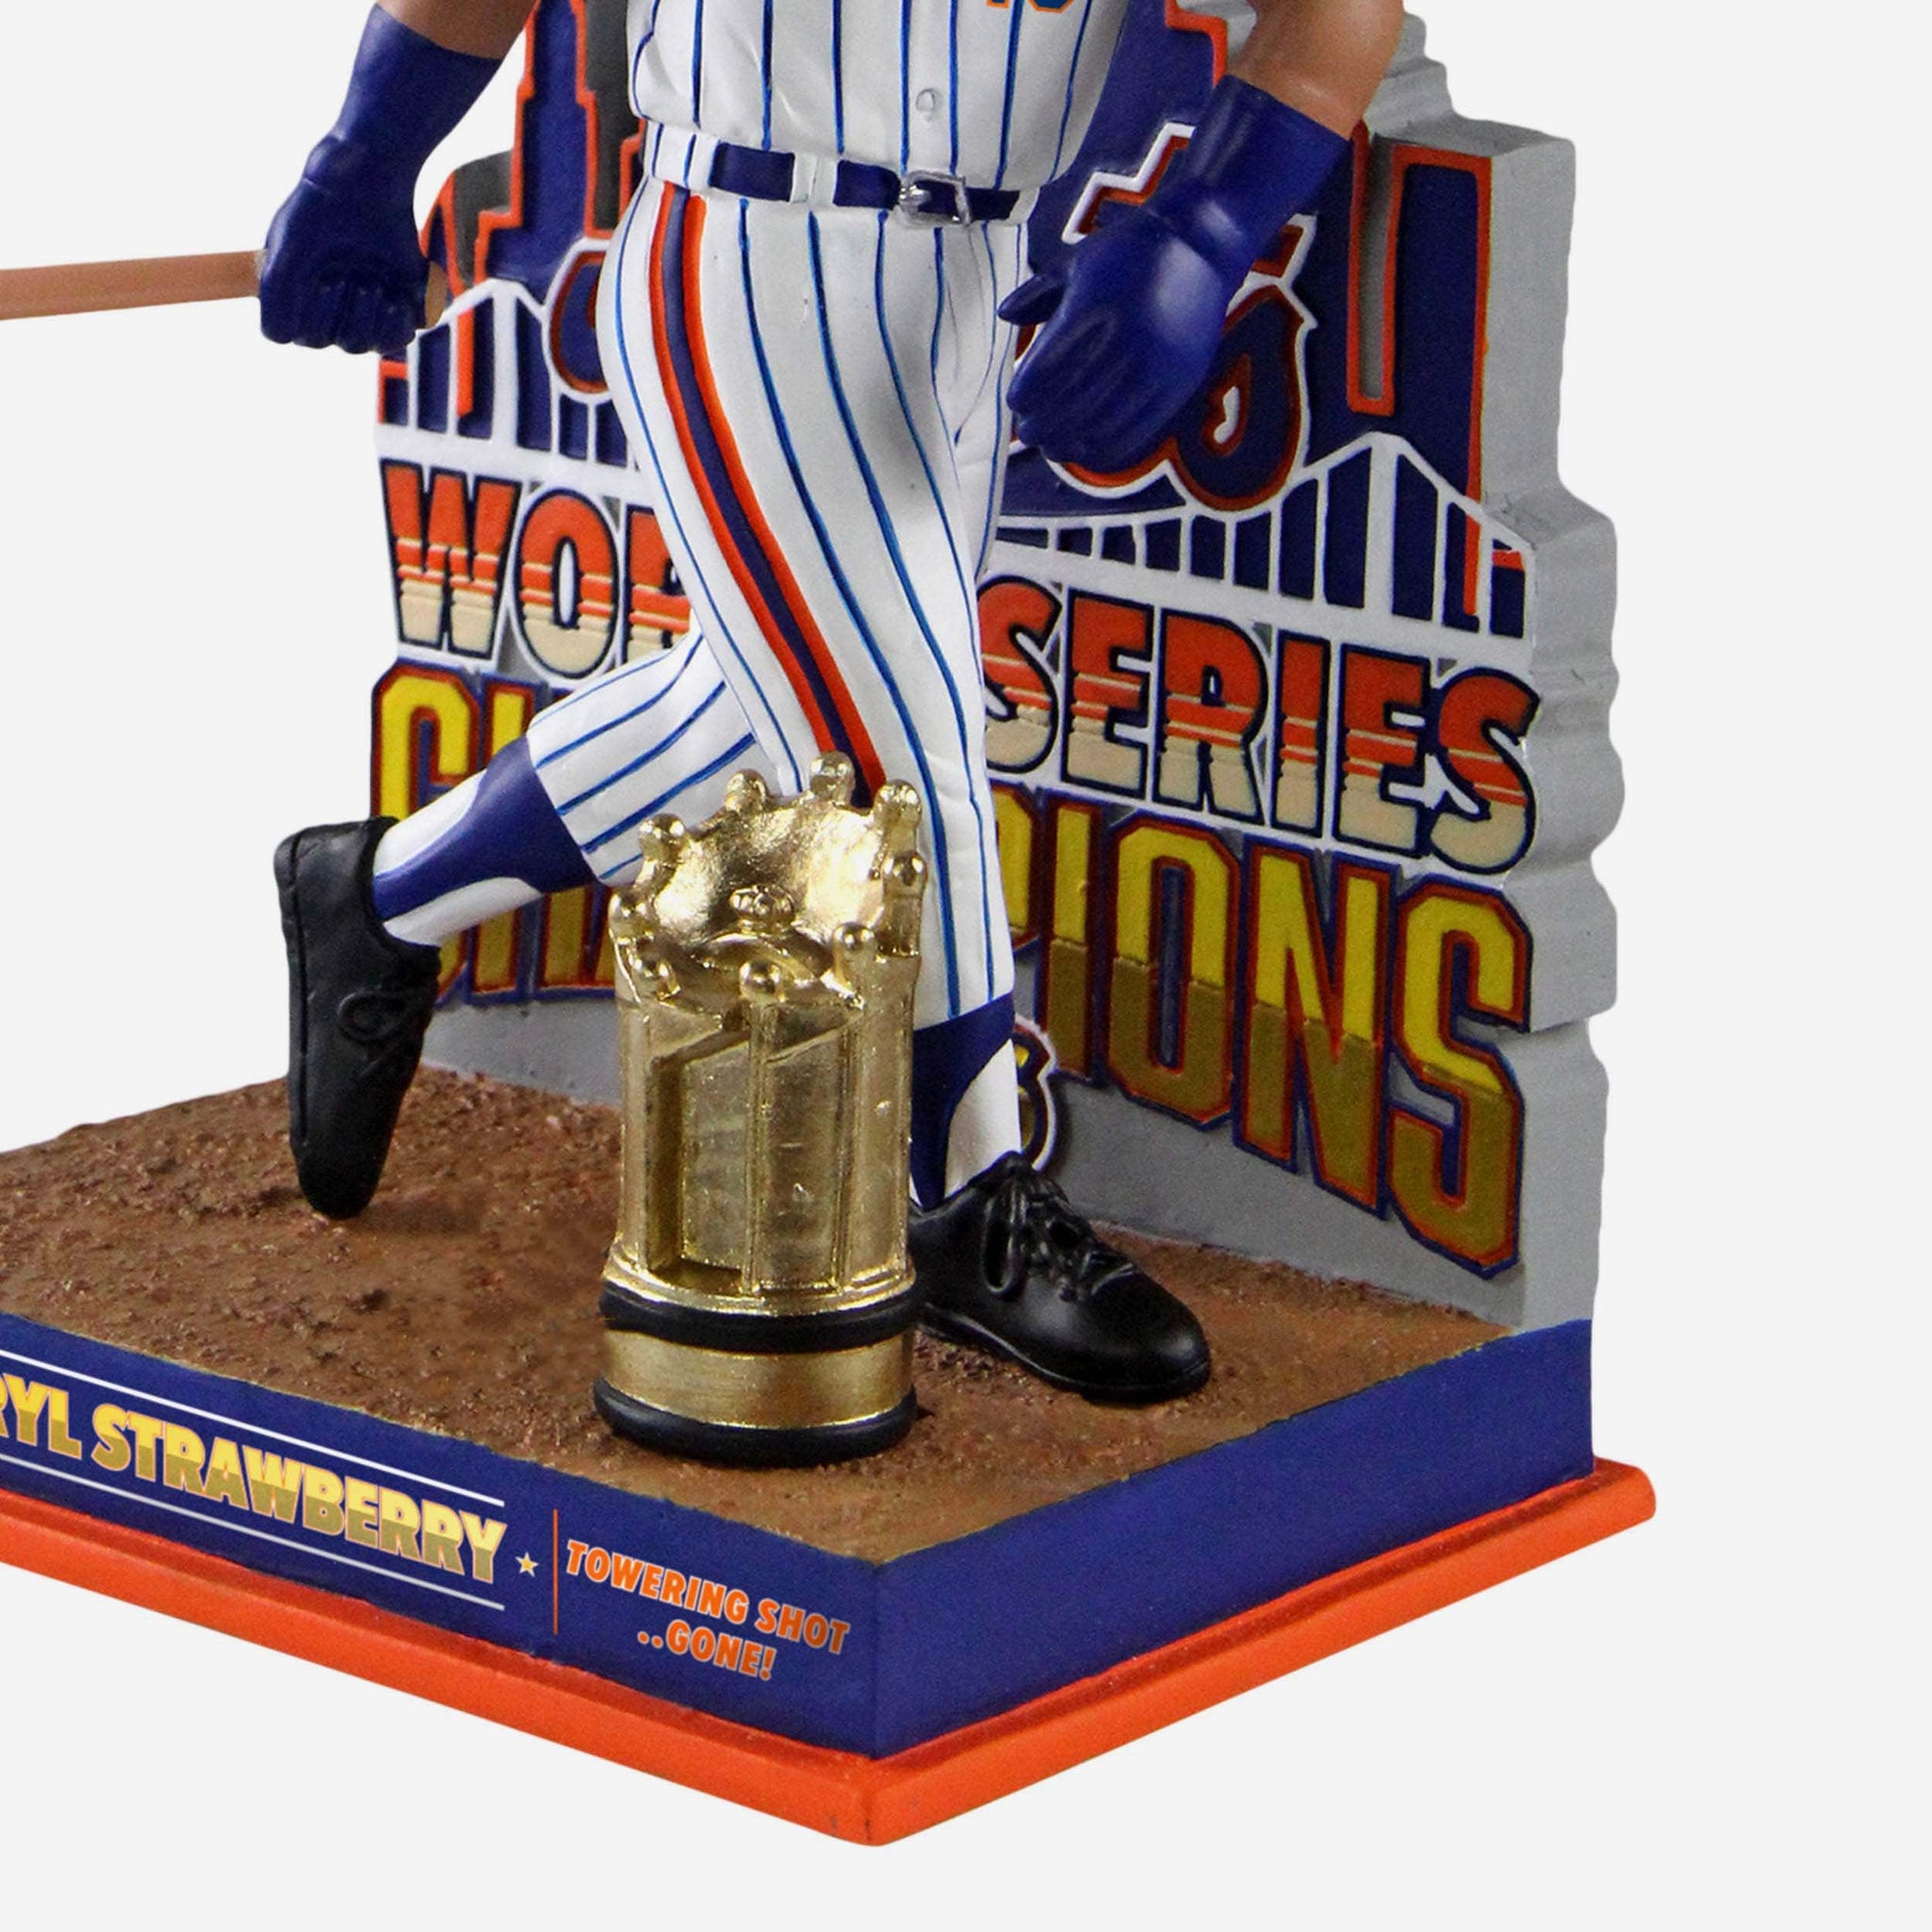 Darryl Strawberry New York Mets 1986 World Series Champions